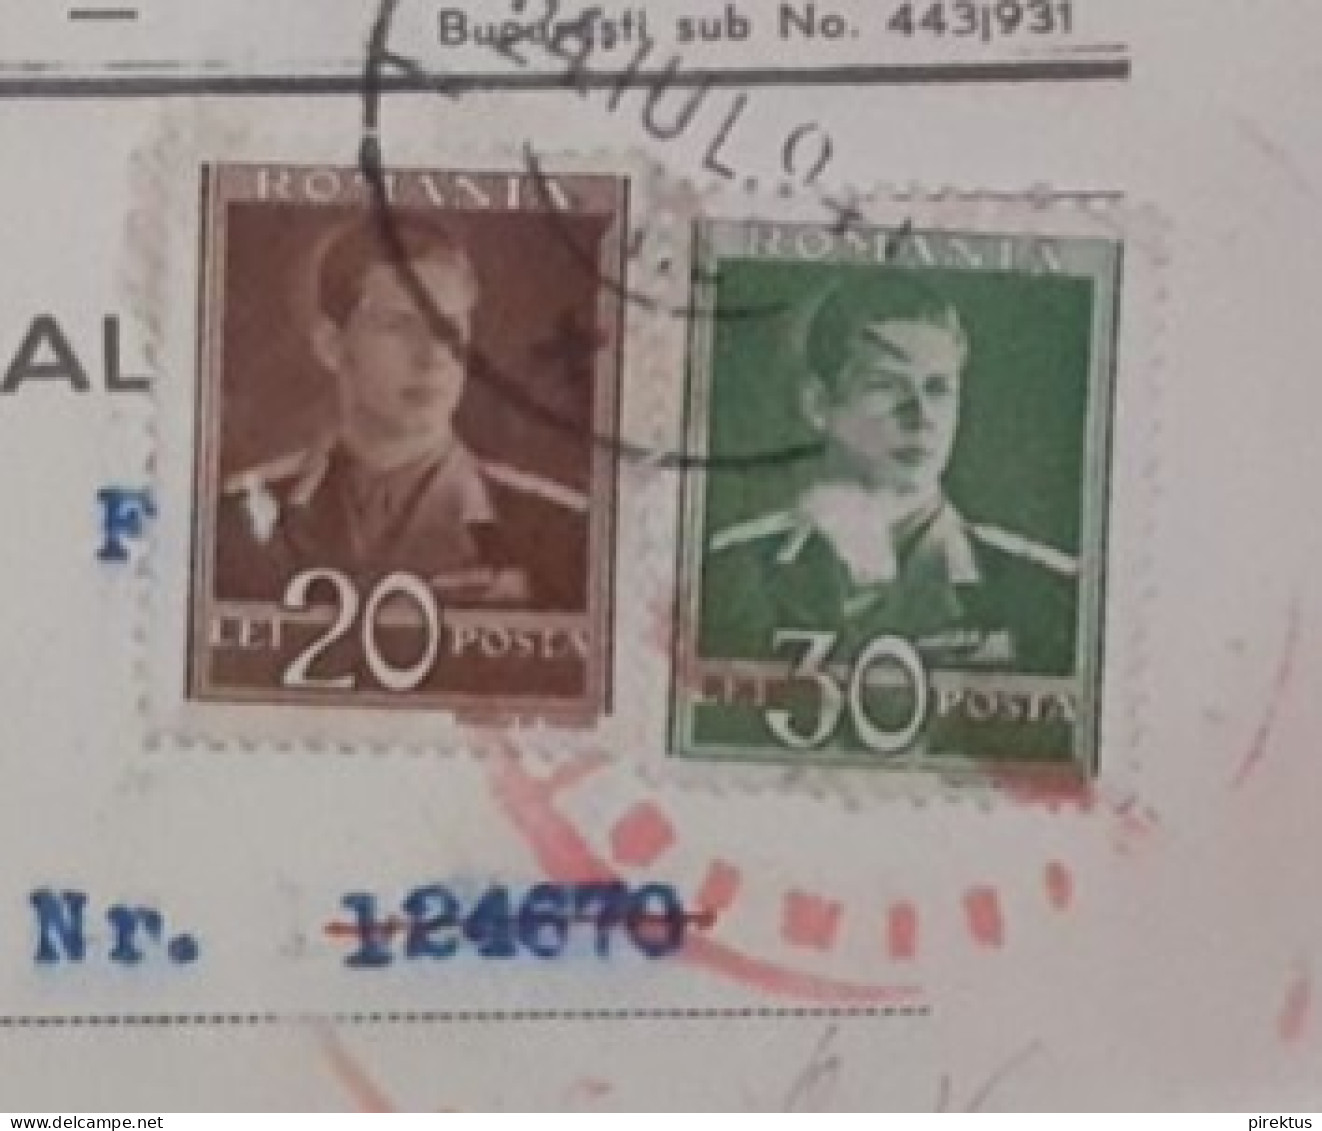 Romania 1941 Post Cancel Card - Cartas & Documentos